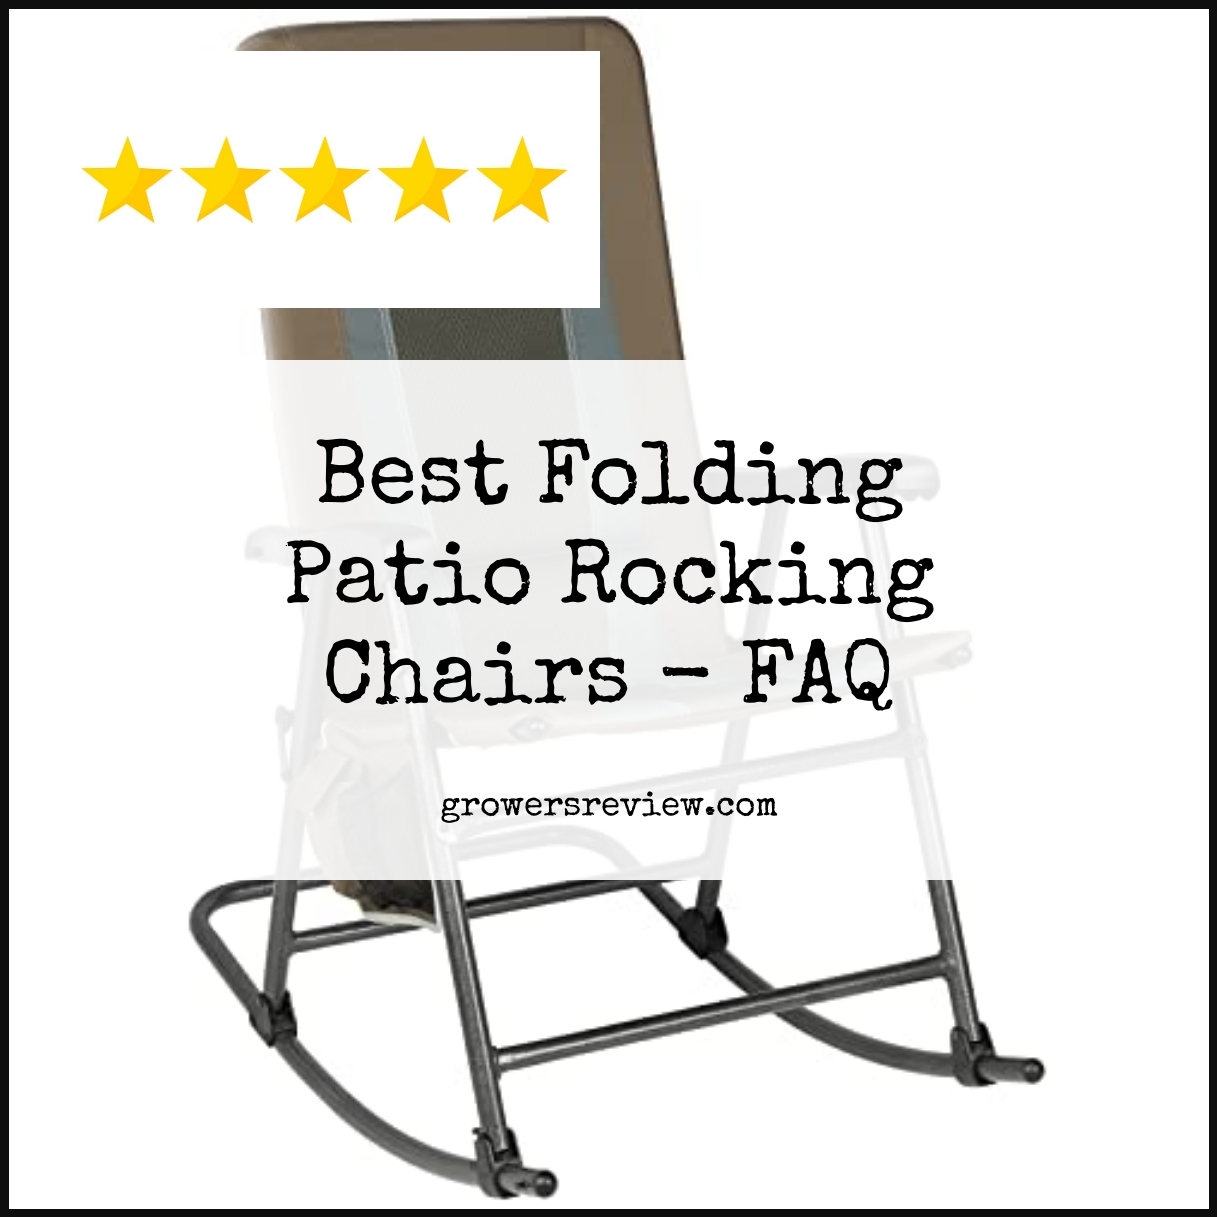 Best Folding Patio Rocking Chairs - FAQ